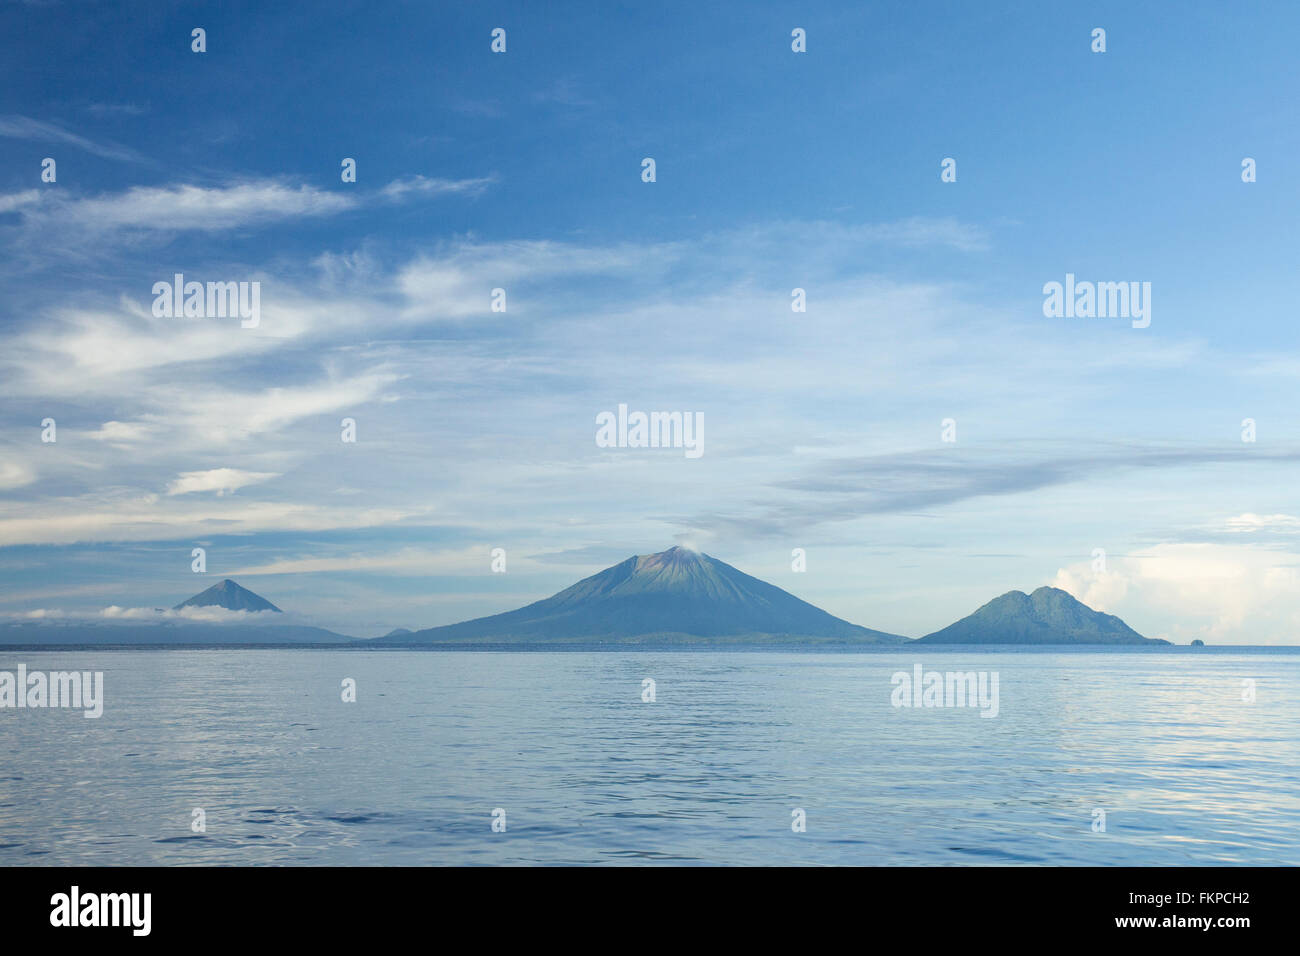 Breathaking Blick auf Gamalama Mountain in den Molukken (Molukken) von Ost-Indonesien. Stockfoto